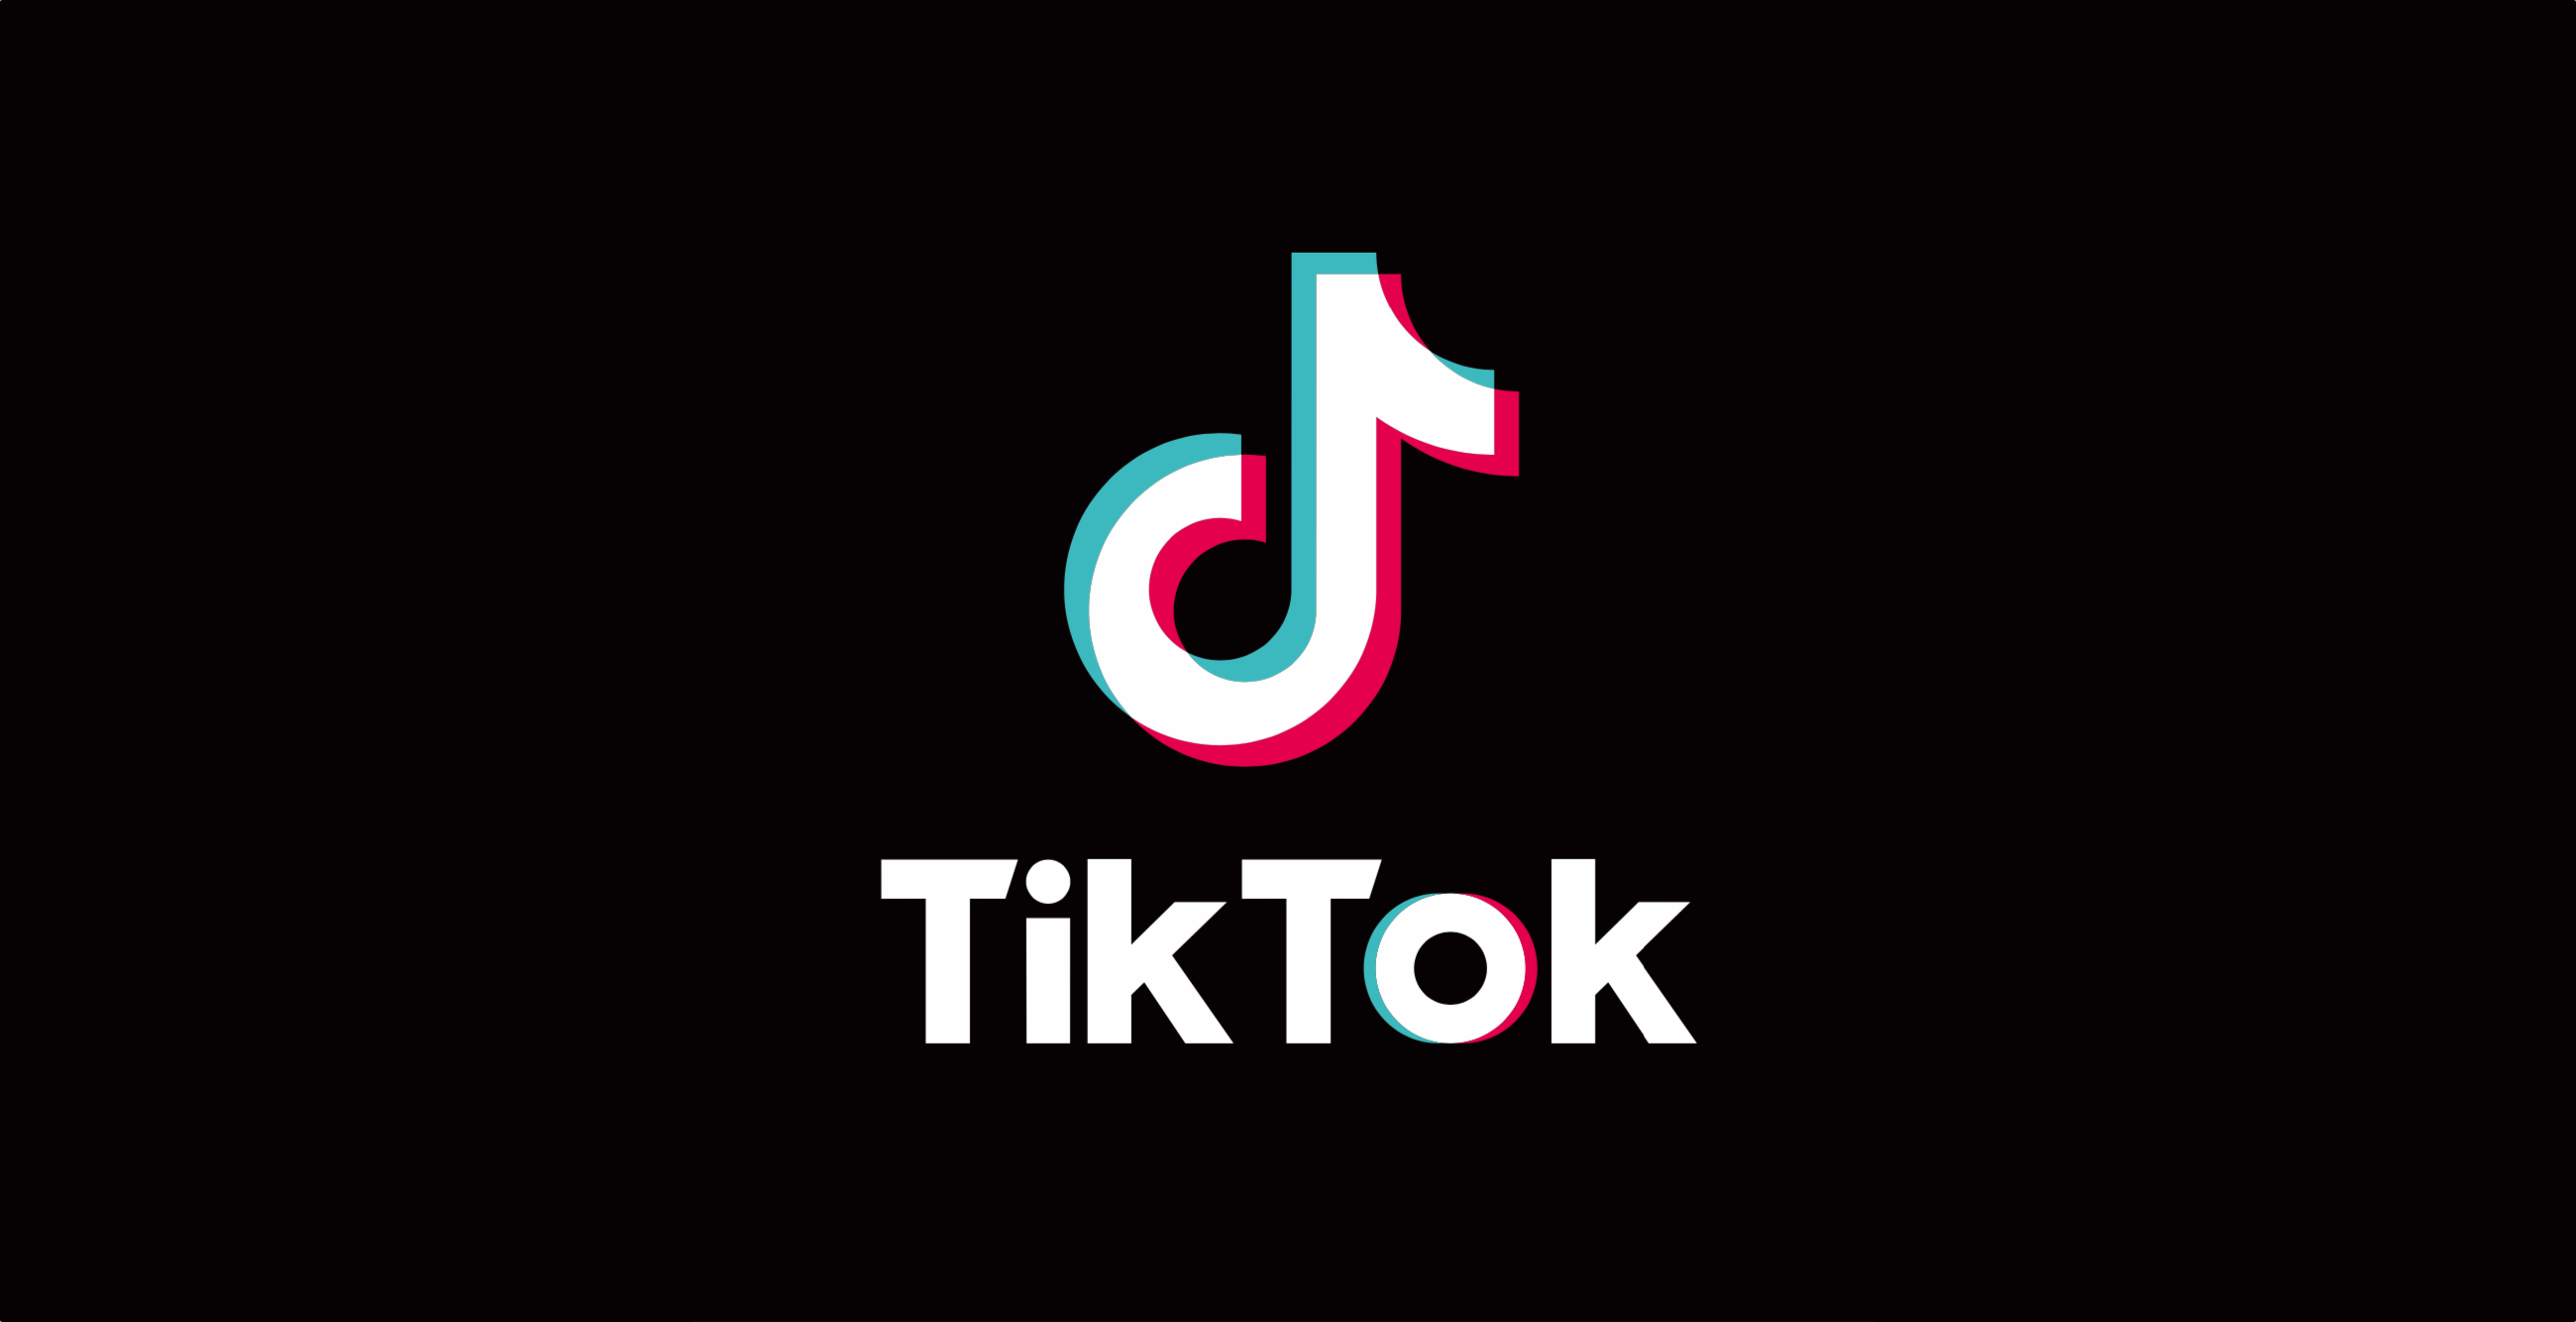 TickTock-TikTok Live Wallpaper - Apps on Google Play